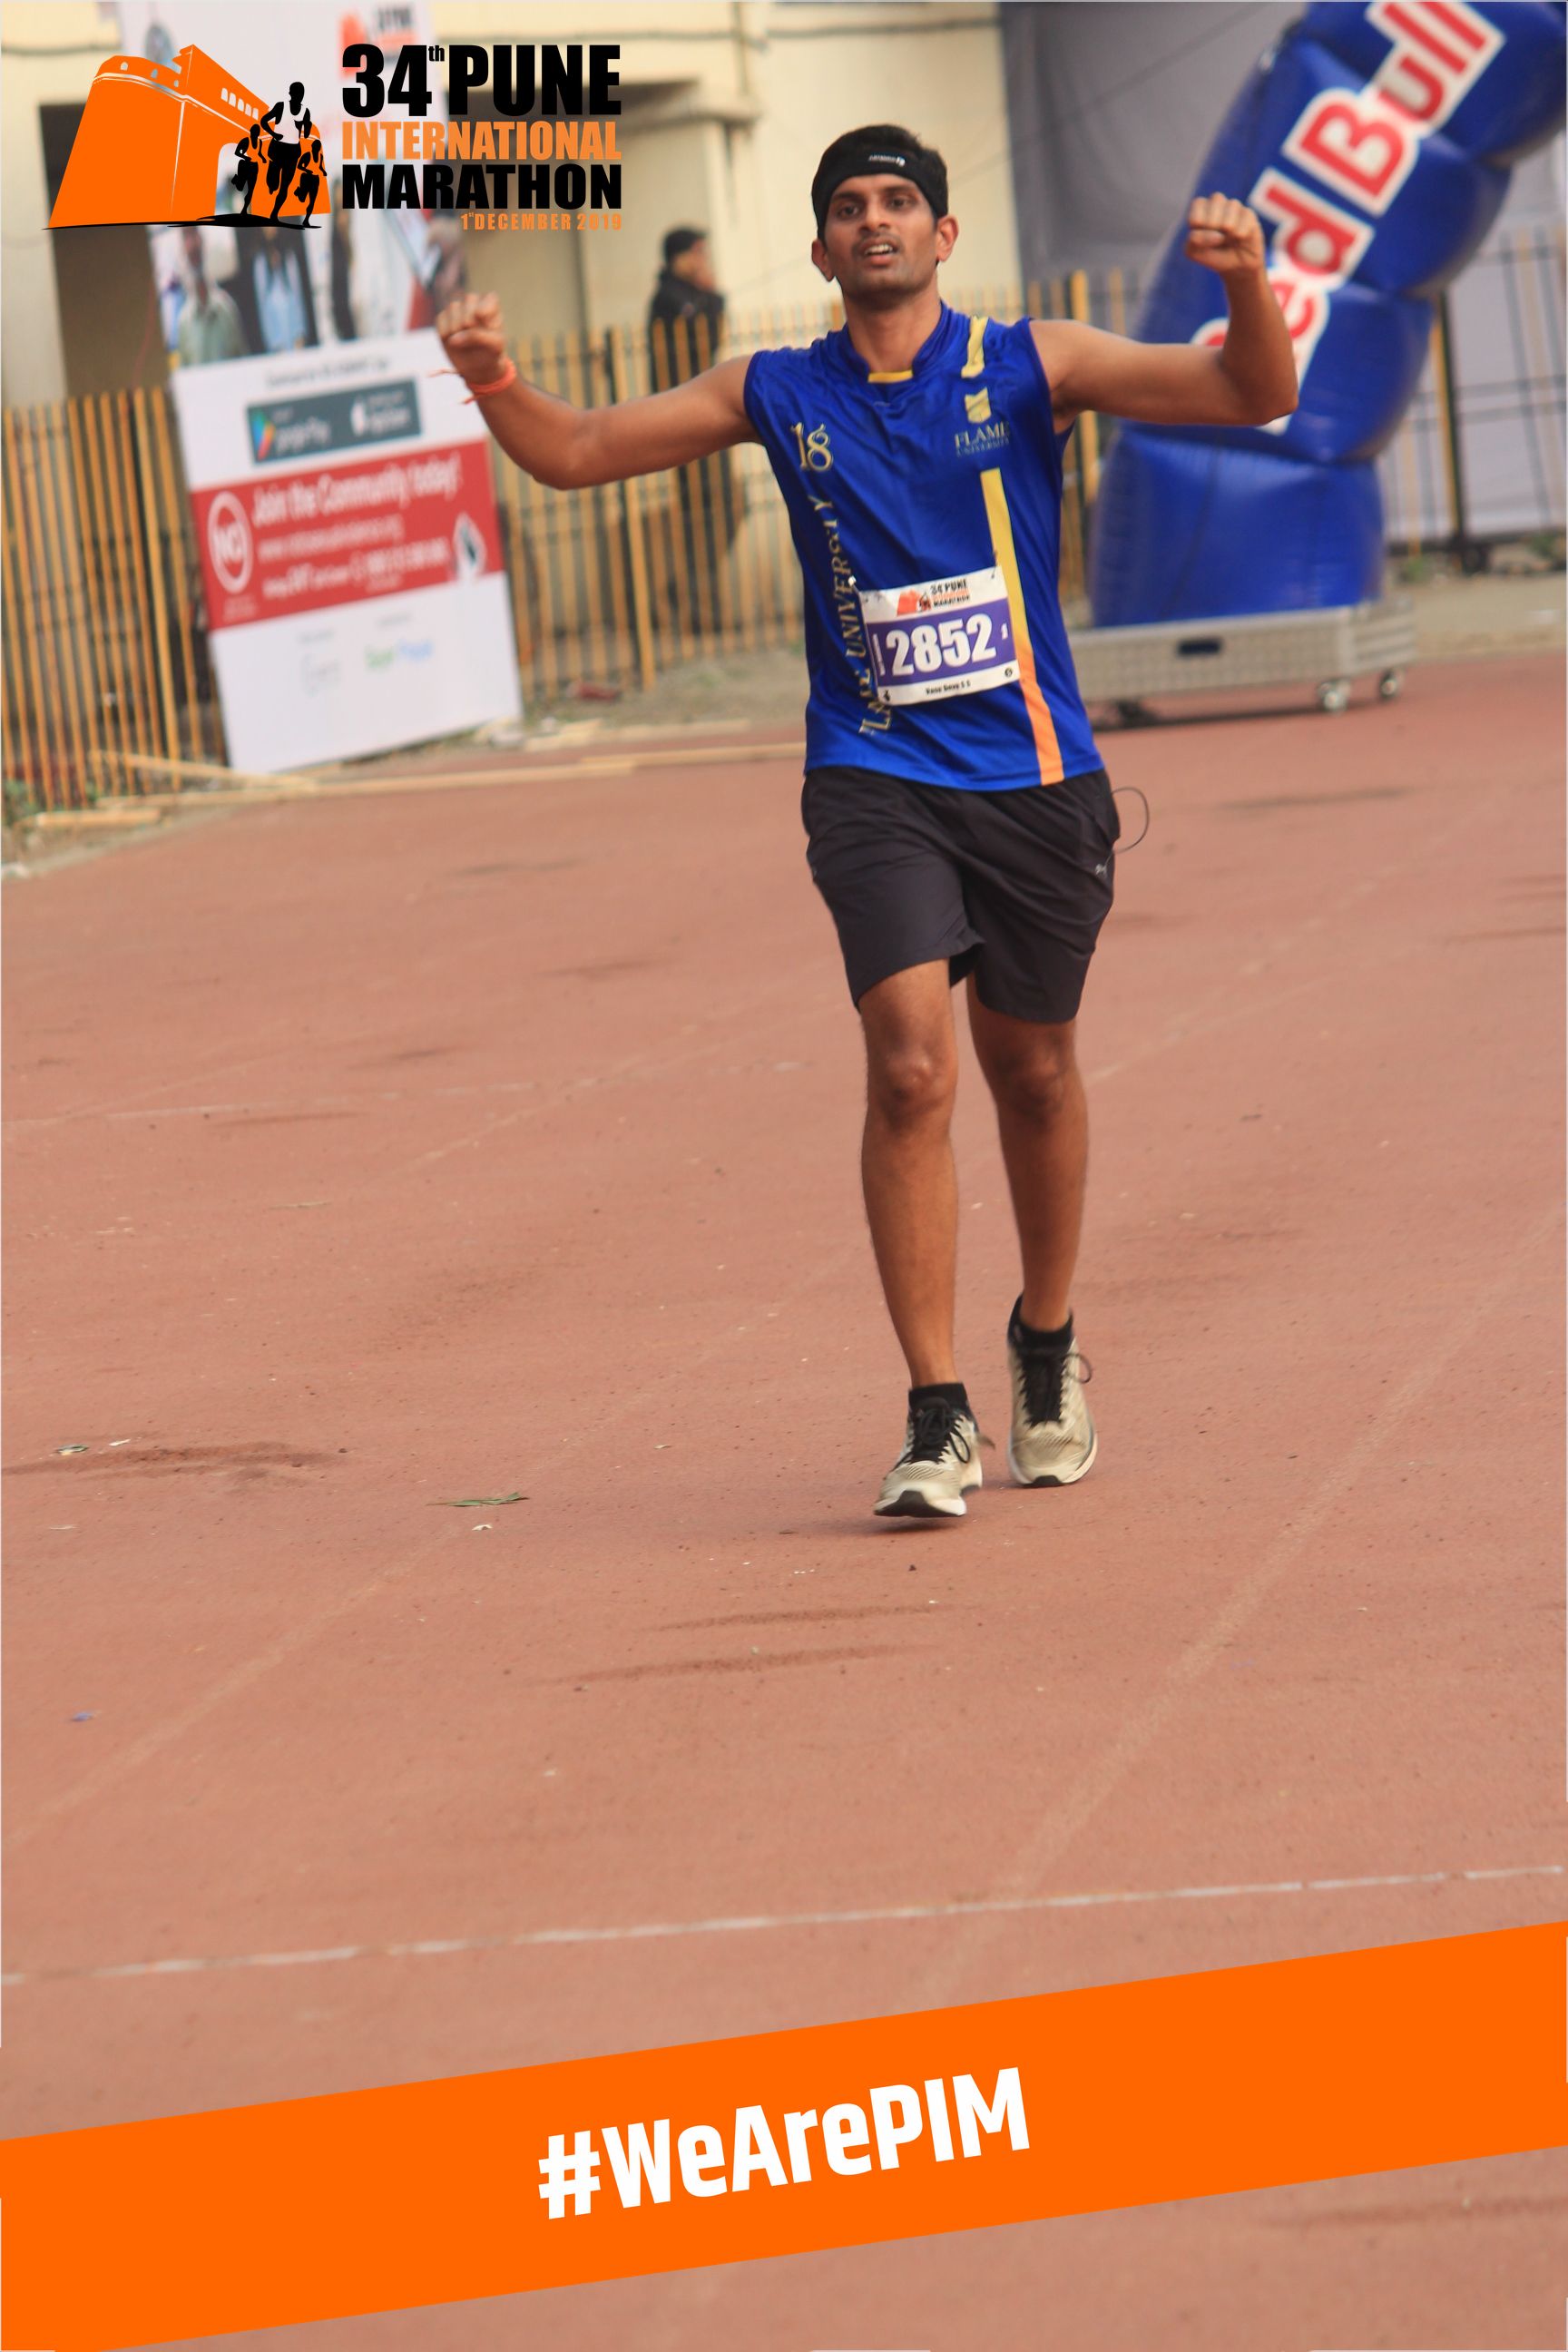 FLAME Run Club participates in the Pune International Marathon